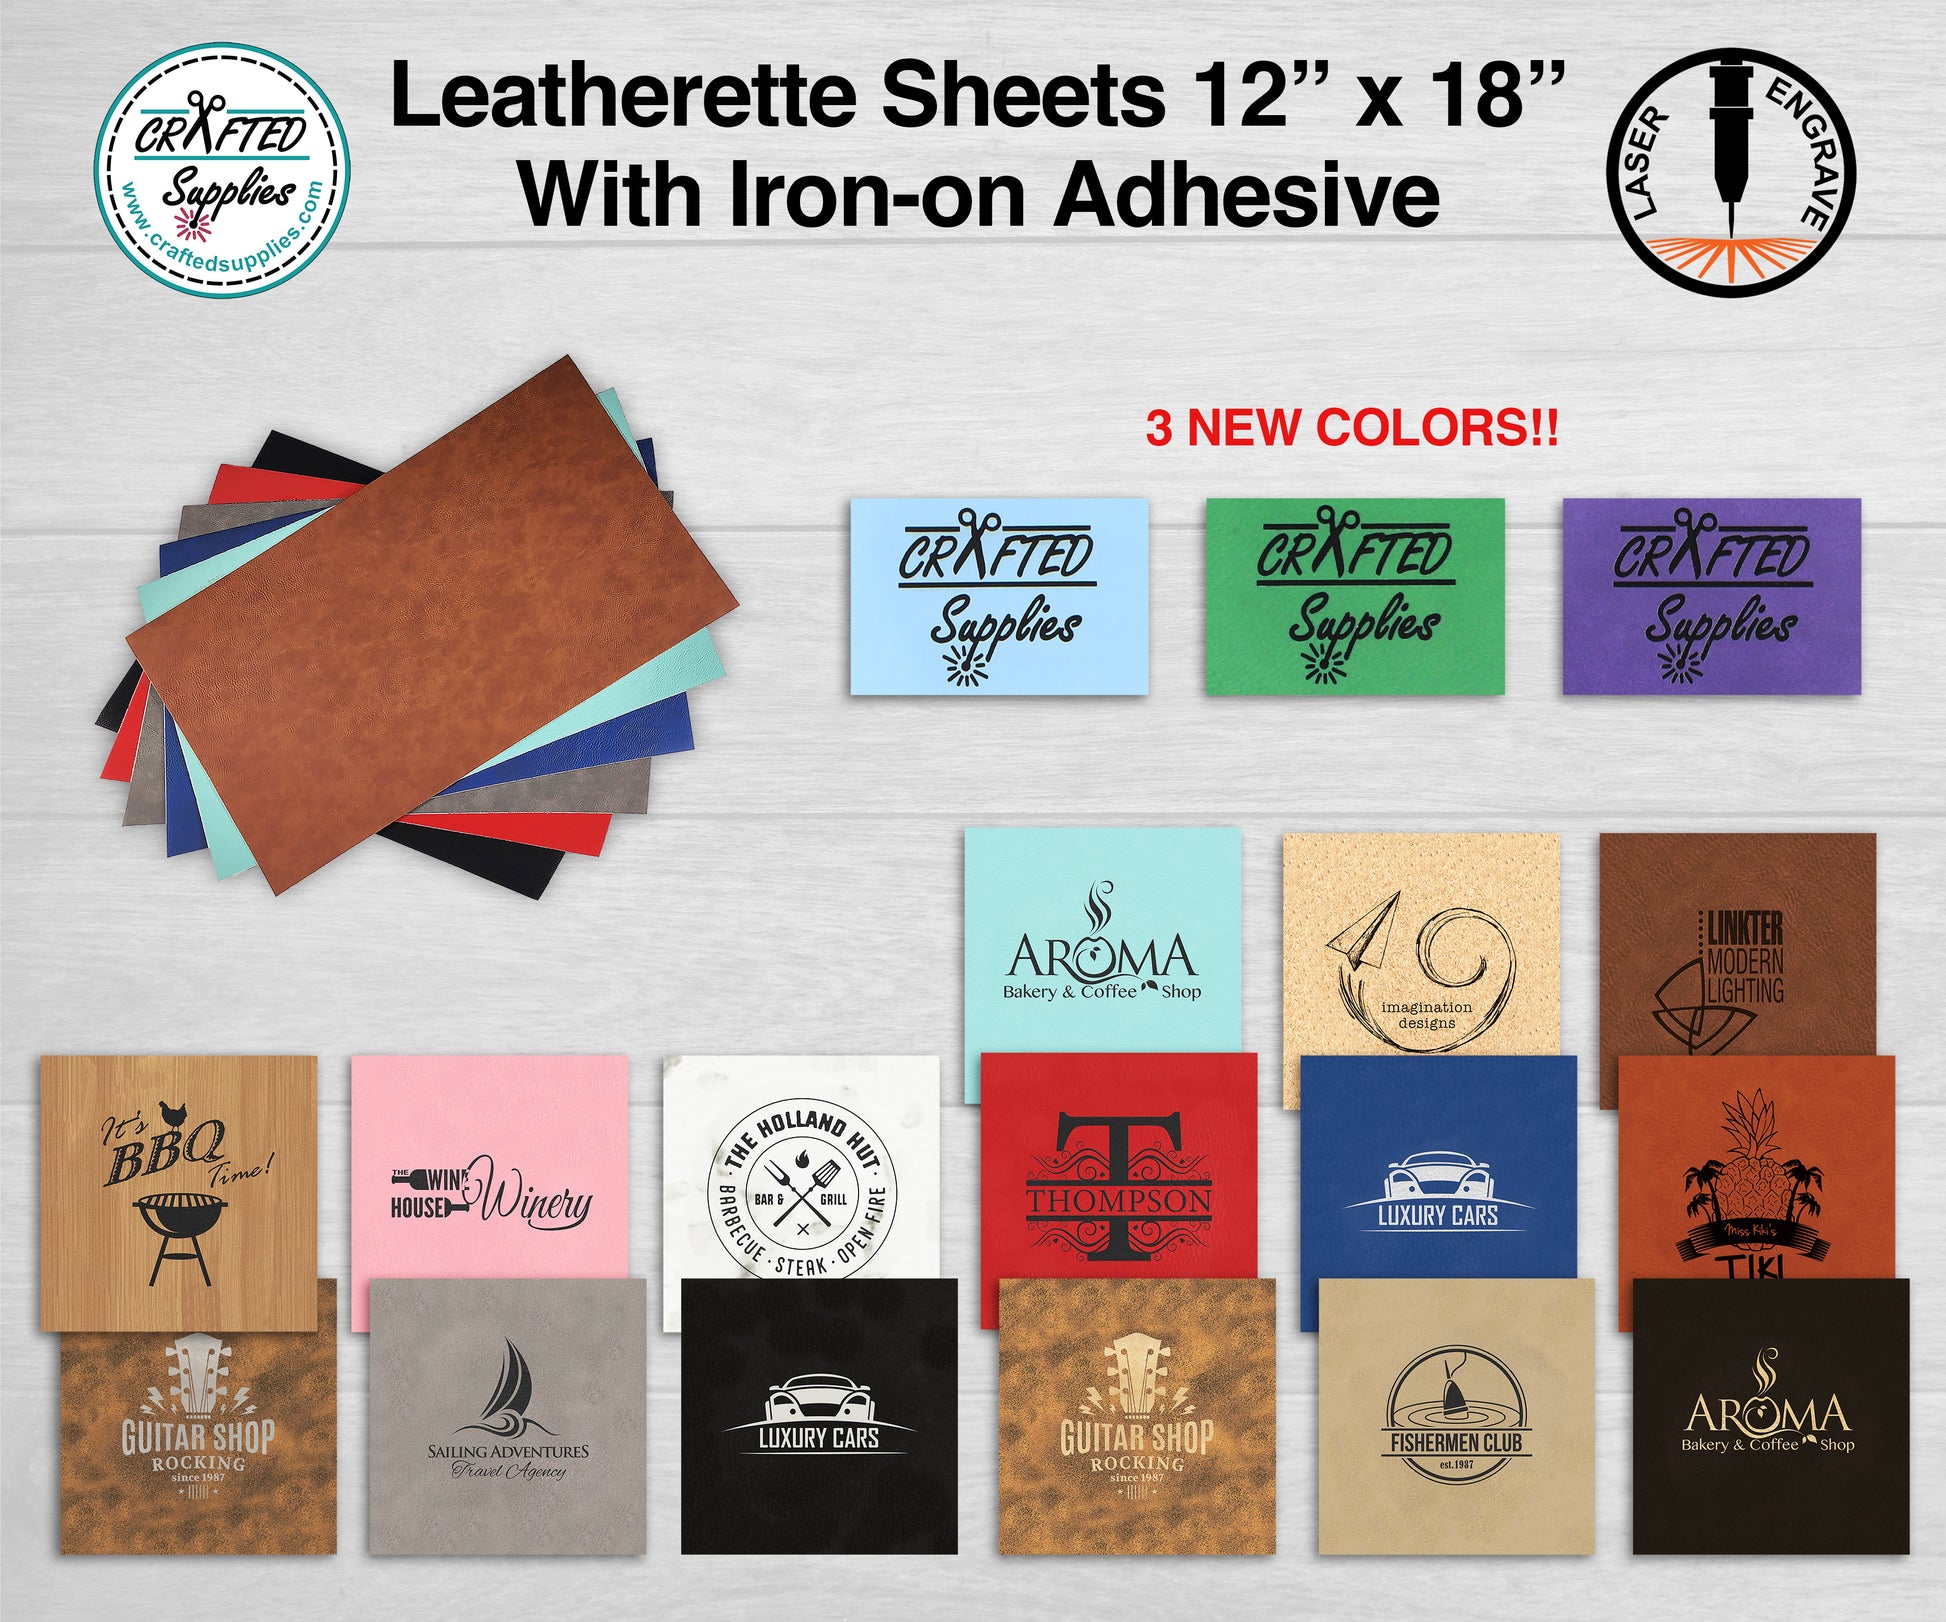 Leatherette Sheets Supplier Near Me